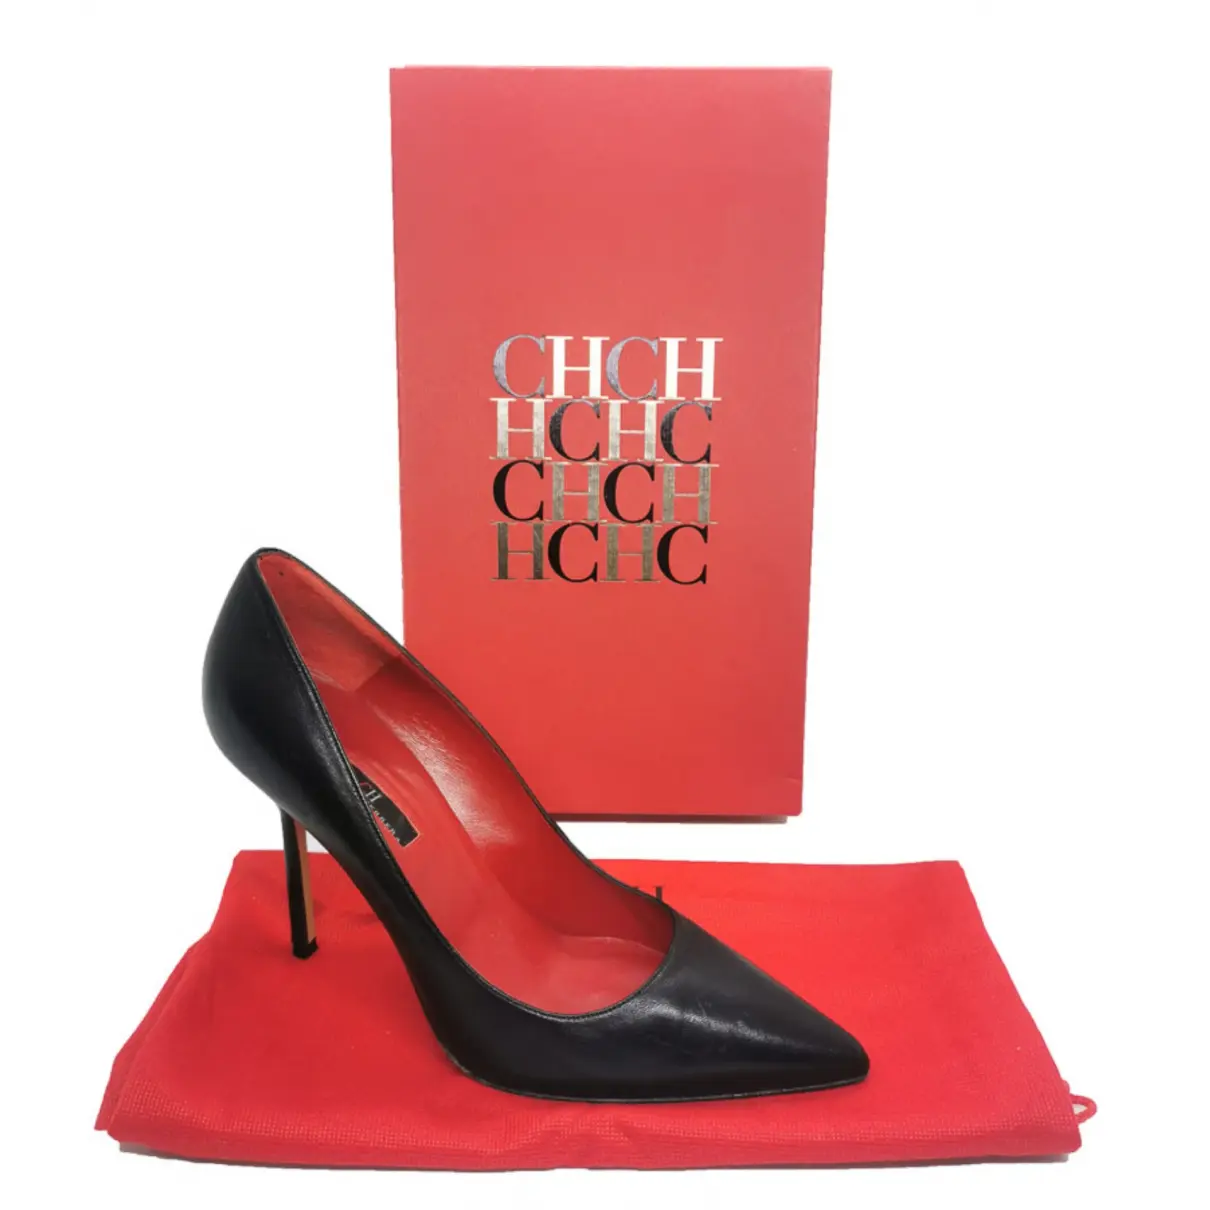 Leather heels Carolina Herrera